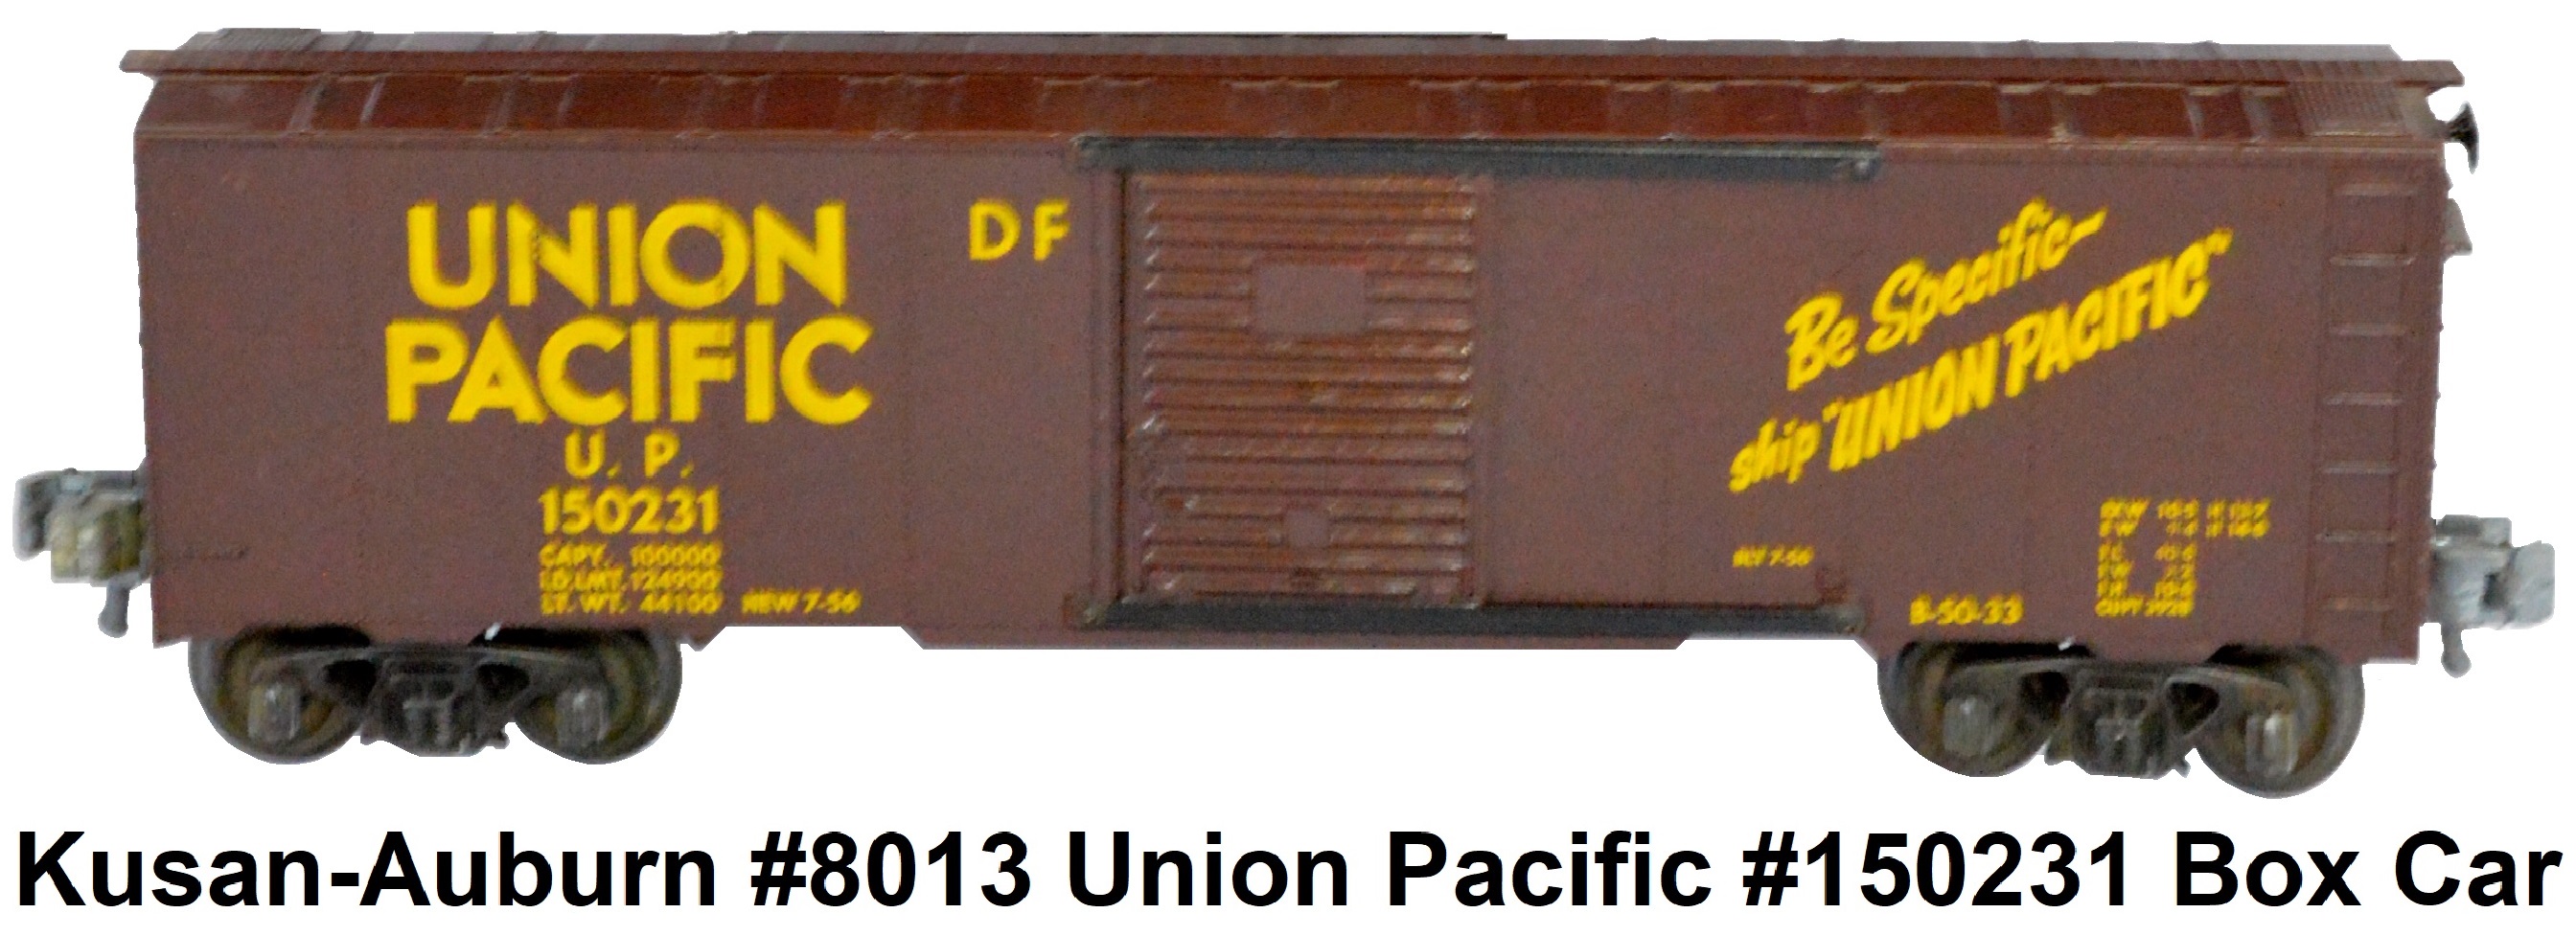 Kusan-Auburn catalog #8013 Union Pacific #150231 box car